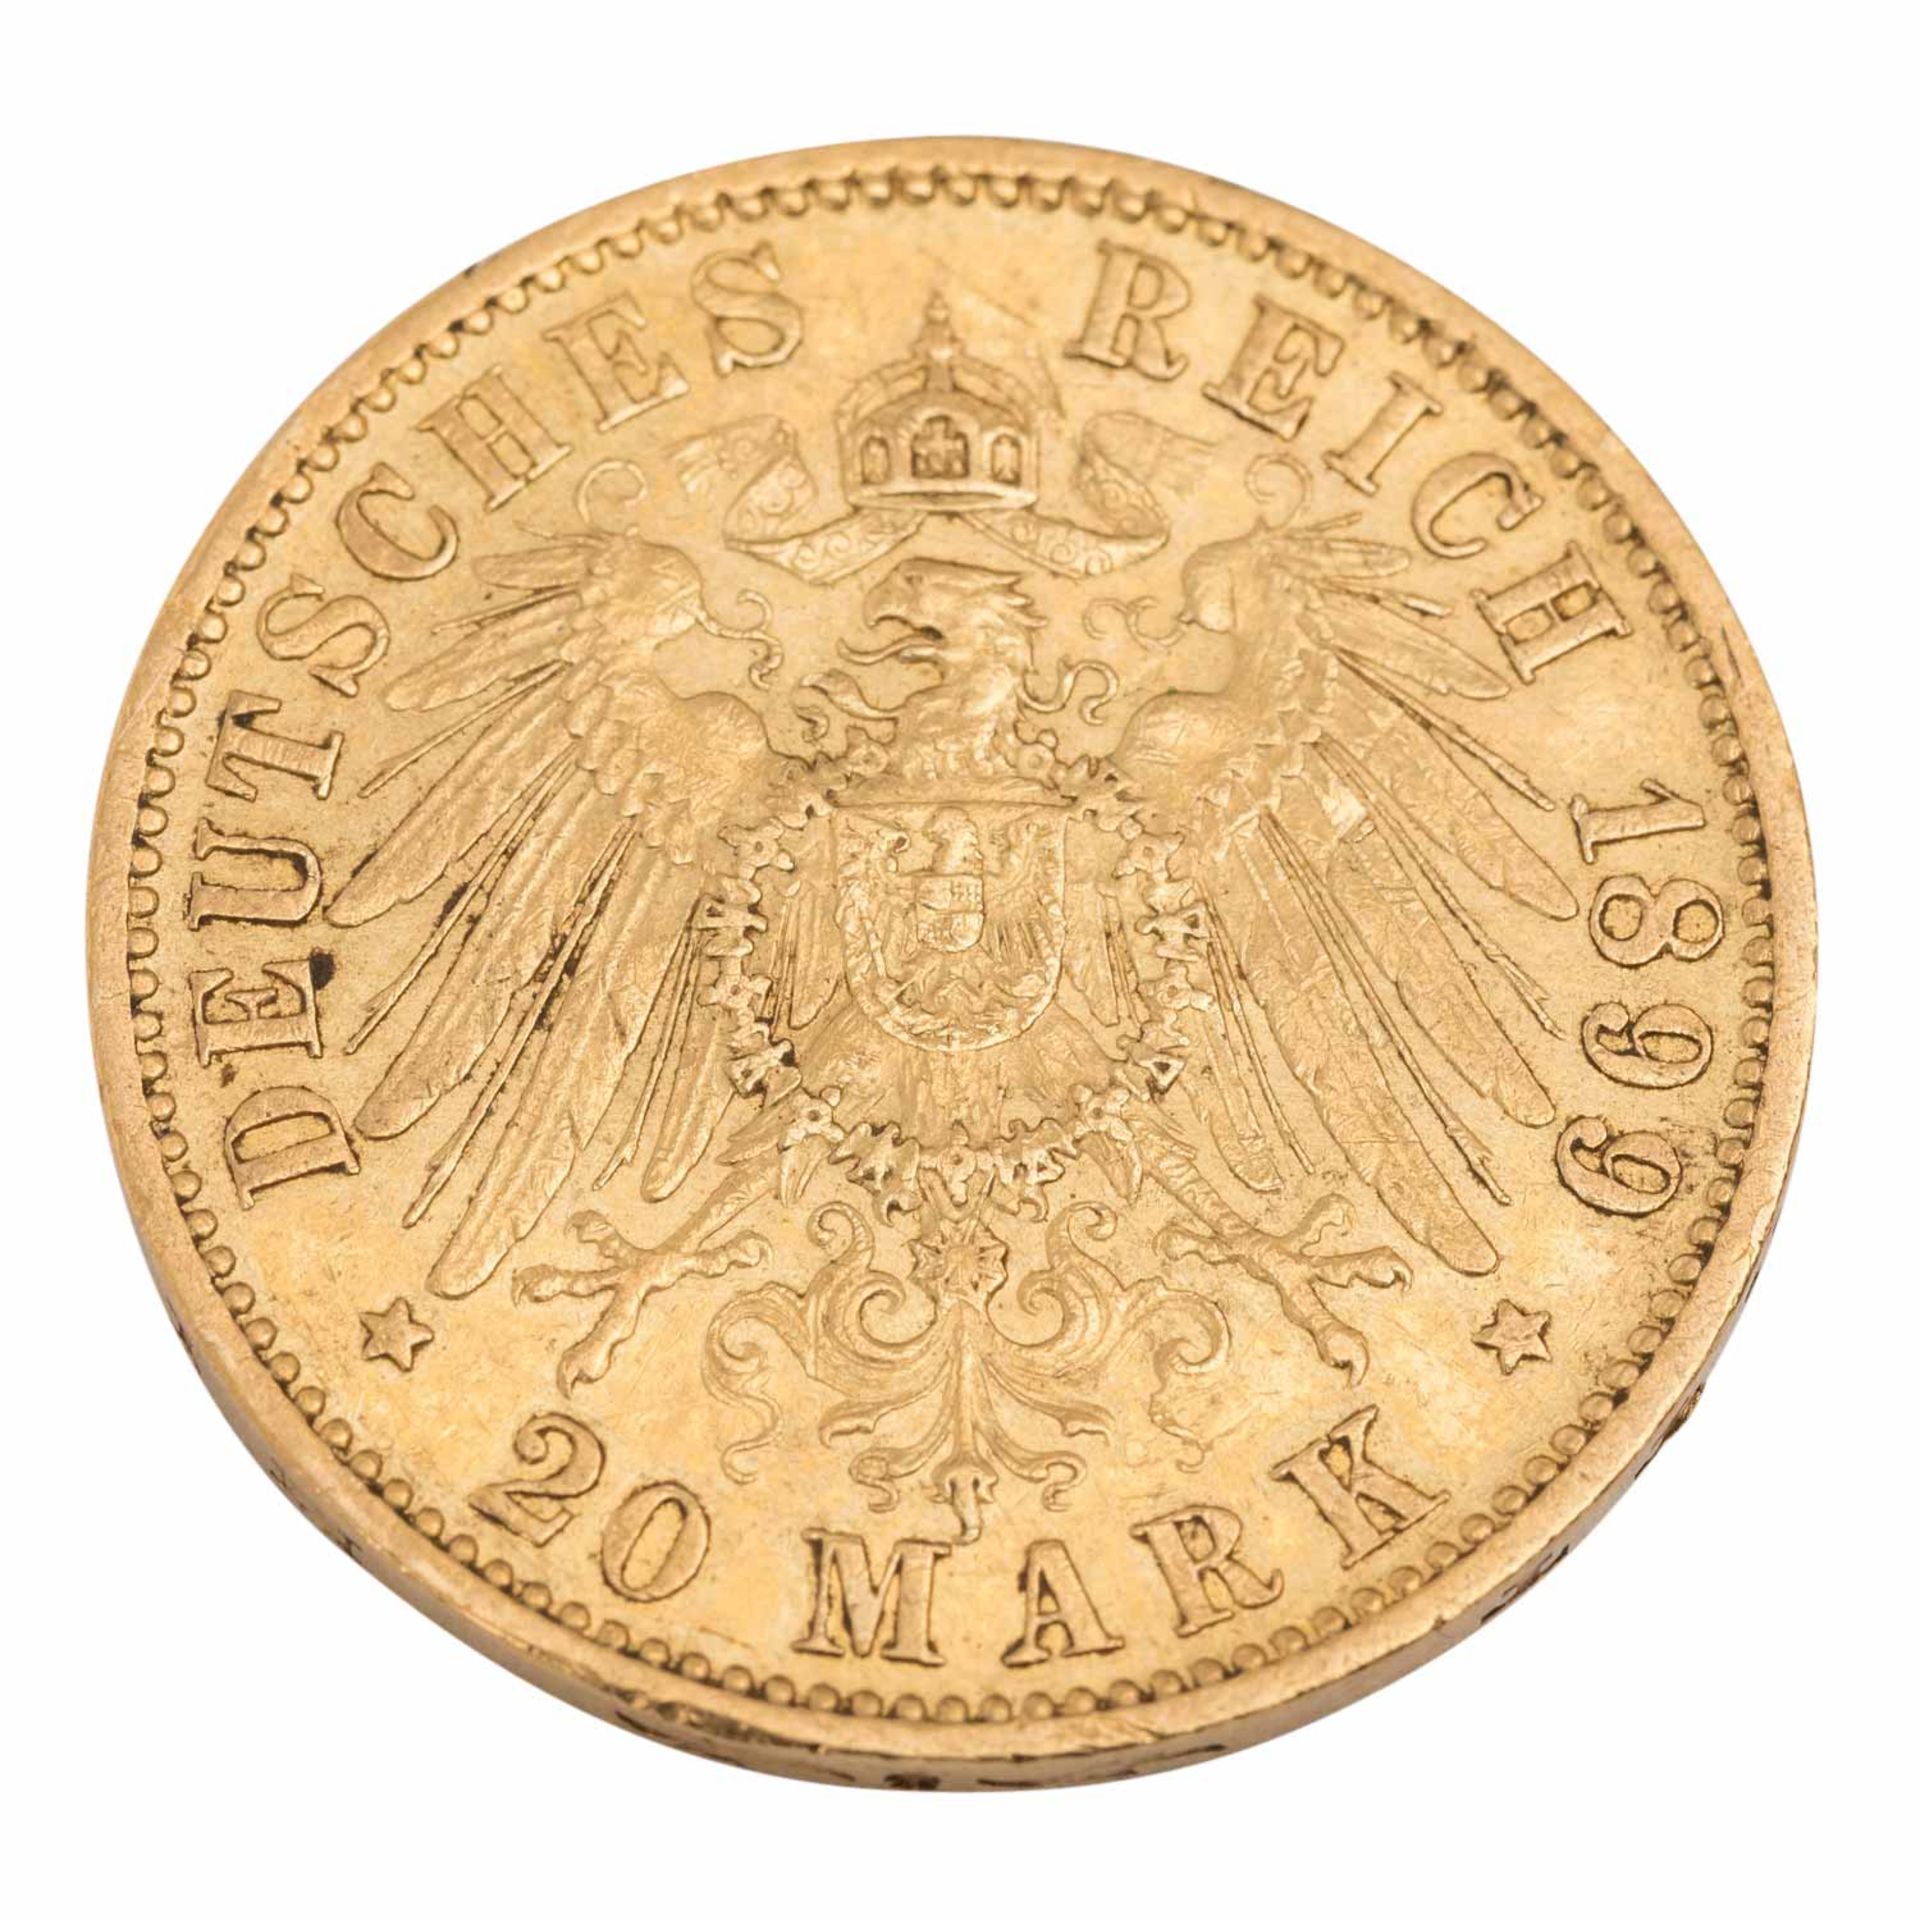 Preussen/GOLD - 20 Mark 1899 A - Image 2 of 2